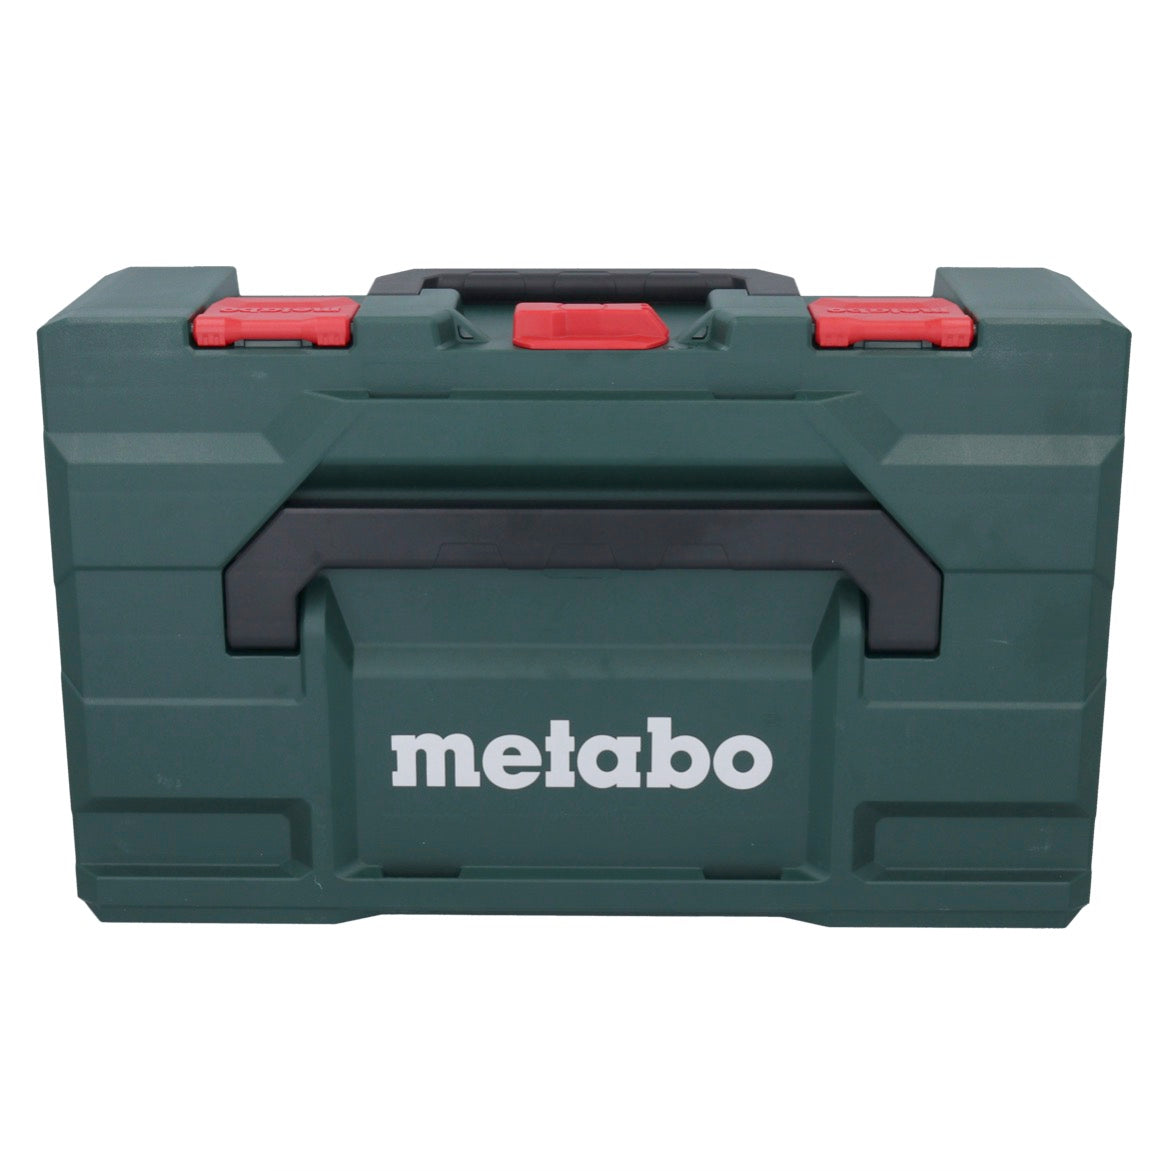 Metabo WPB 18 LT BL 11-125 Quick Akku Winkelschleifer 18 V 125 mm Brushless + 1x Akku 5,5 Ah + metaBOX - ohne Ladegerät - Toolbrothers